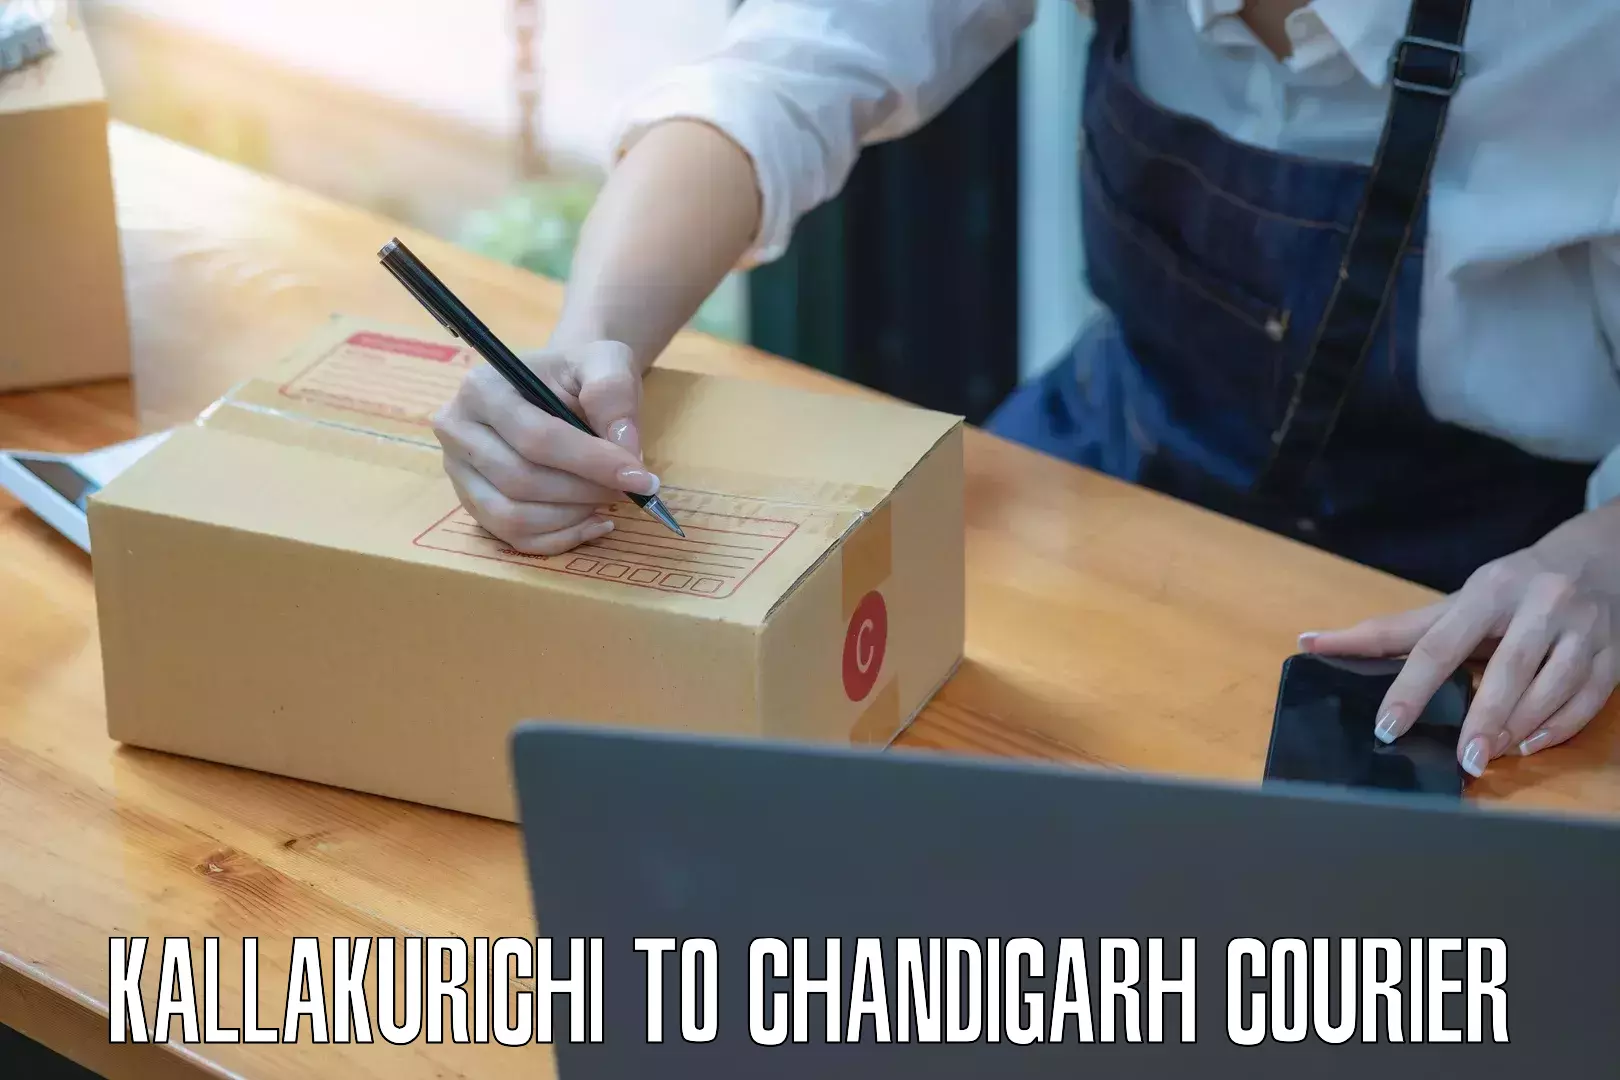 Courier service partnerships Kallakurichi to Chandigarh